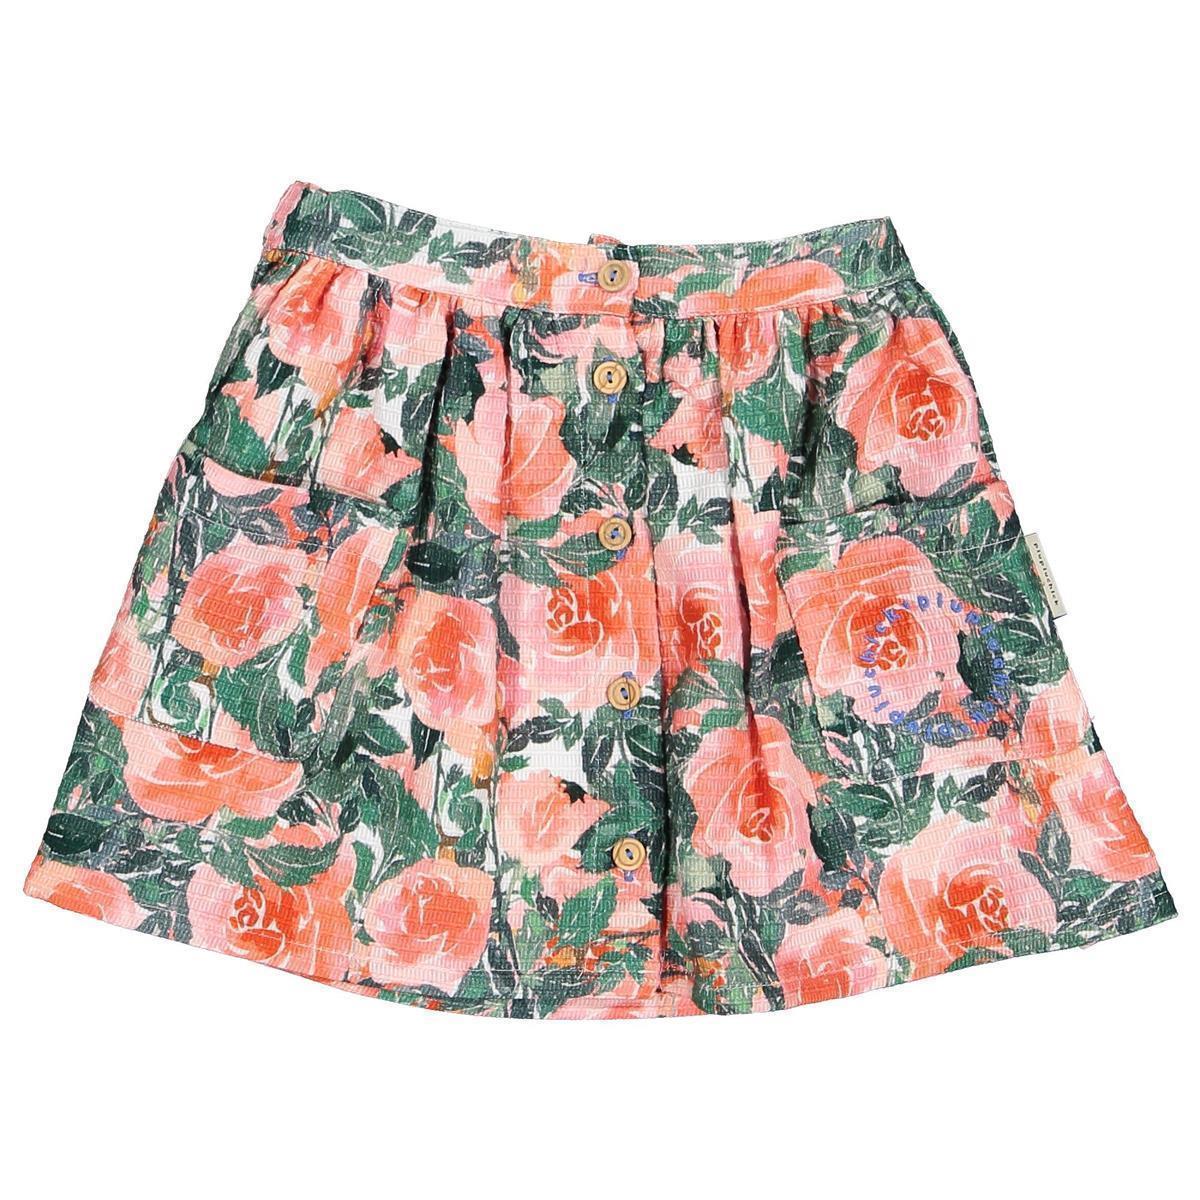 short skirt pockets big flowers